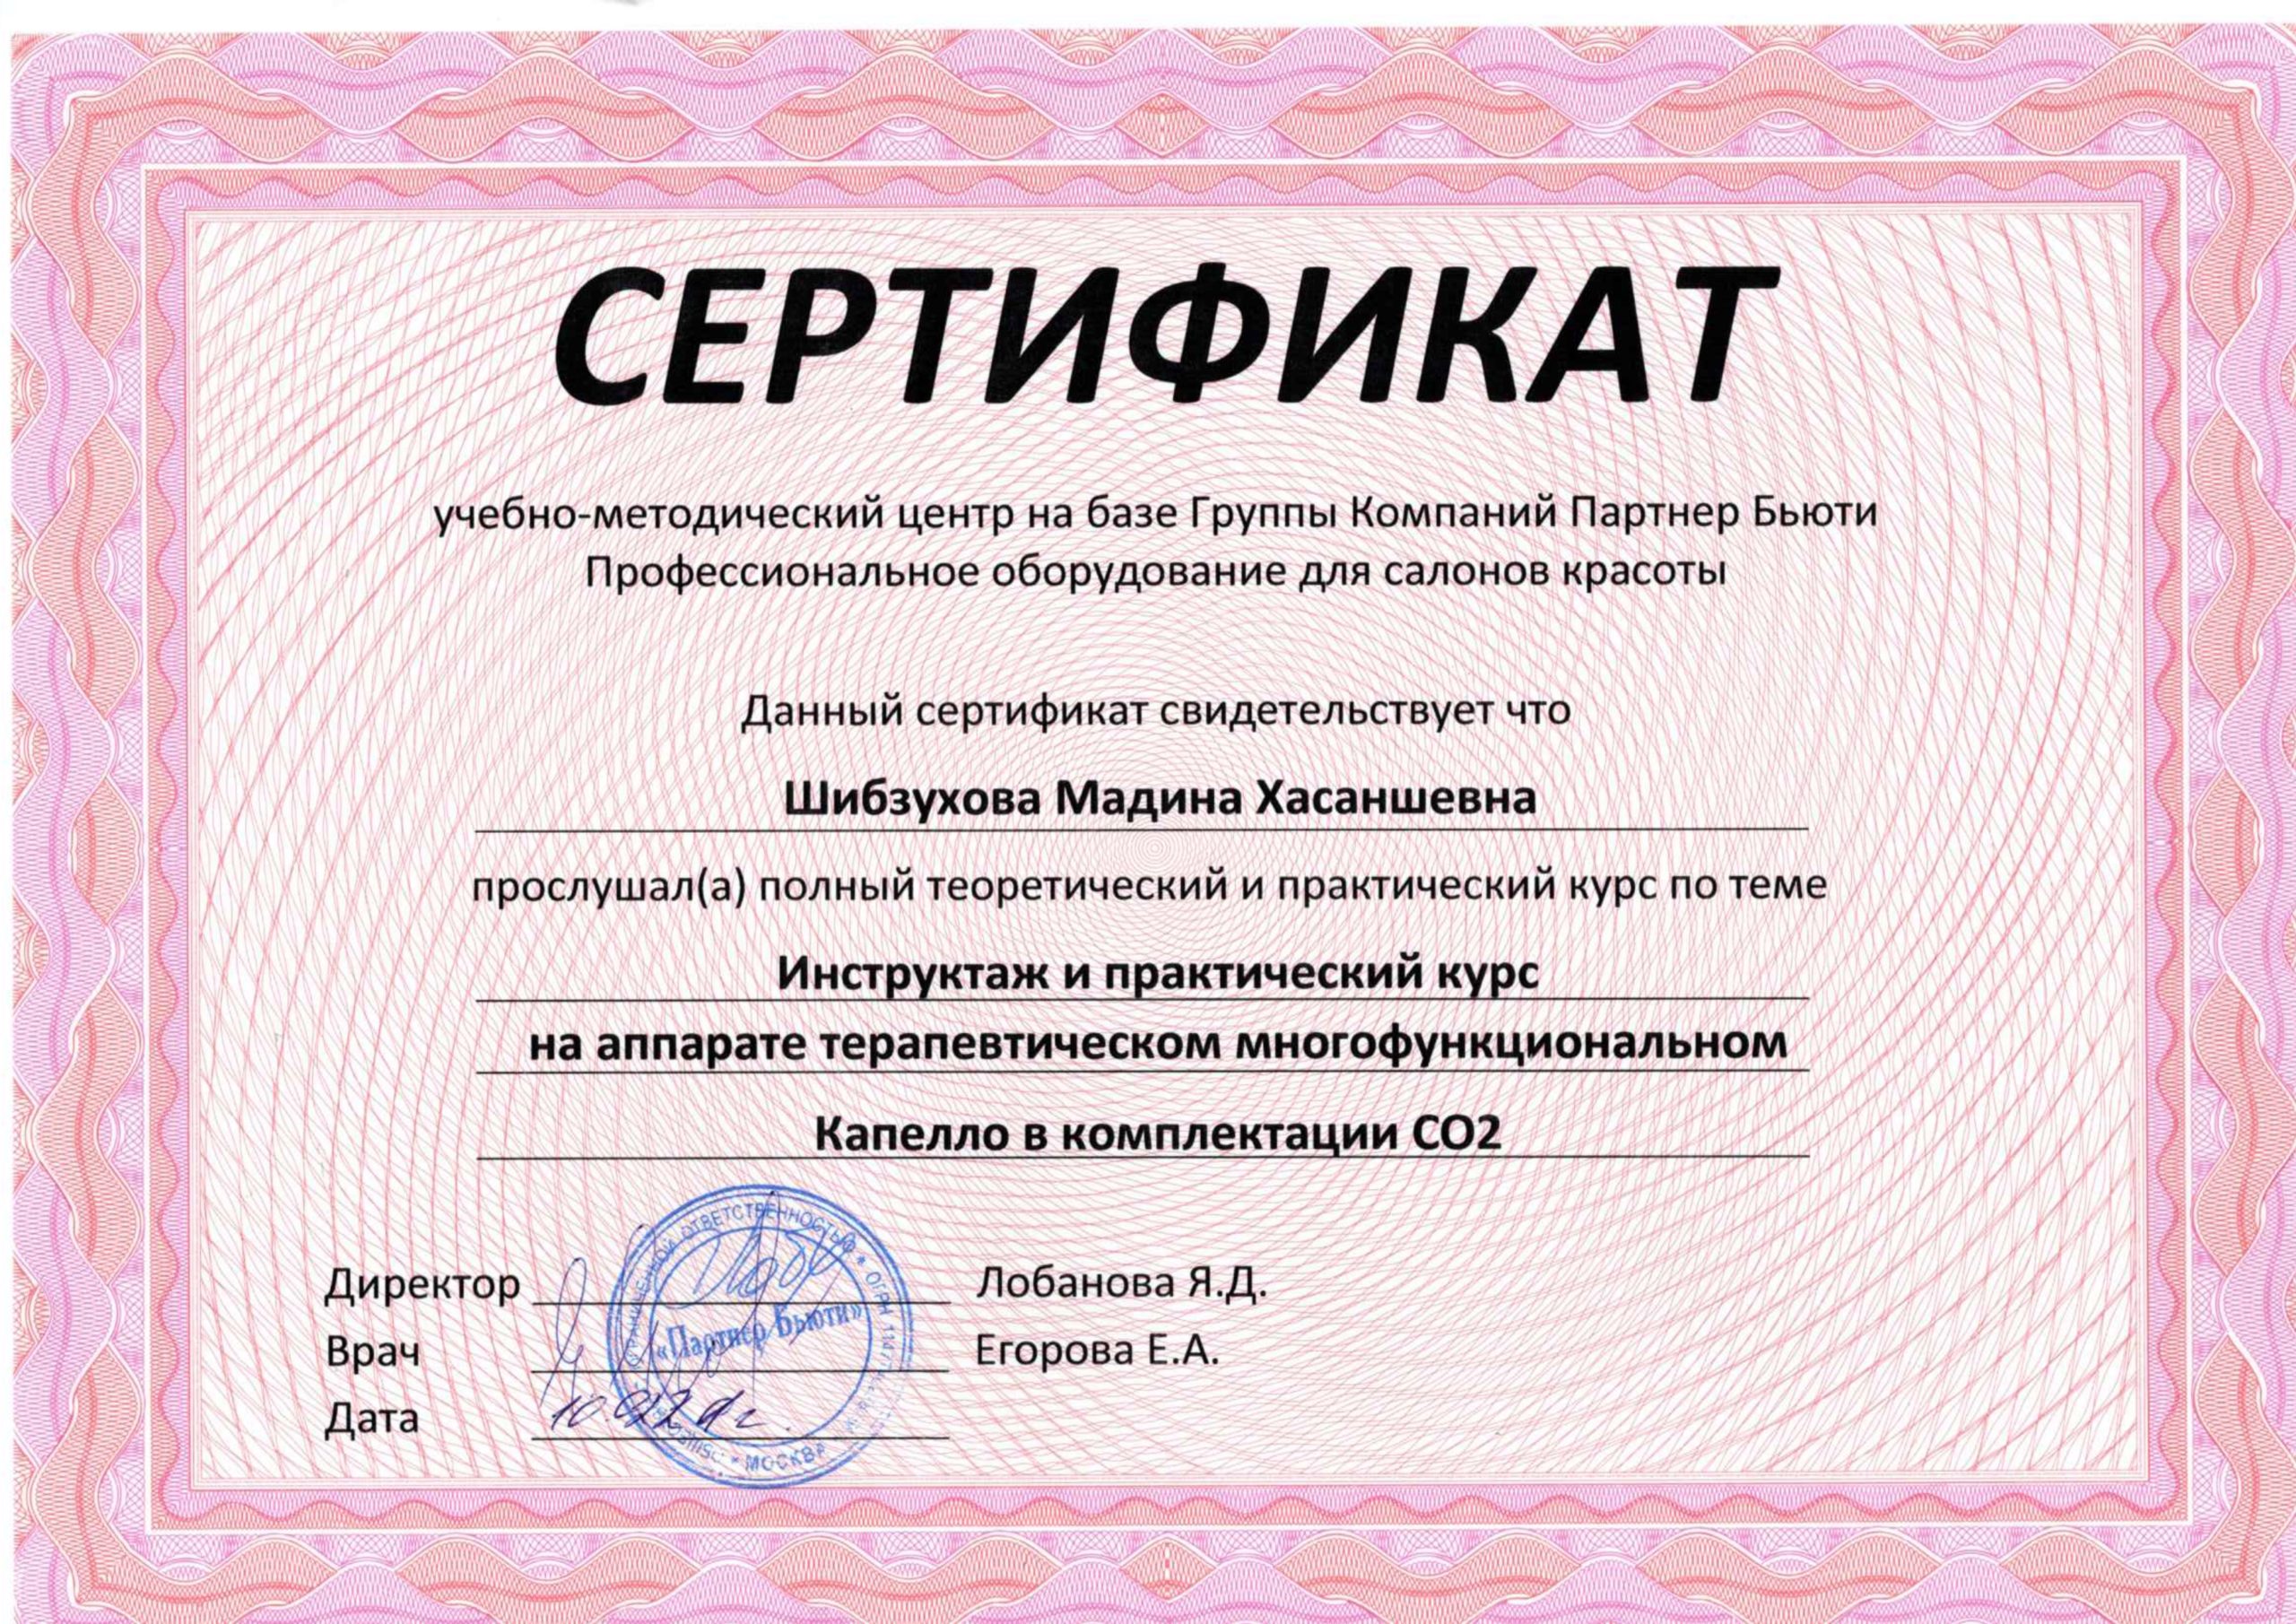 Сертификат Шибзухова1